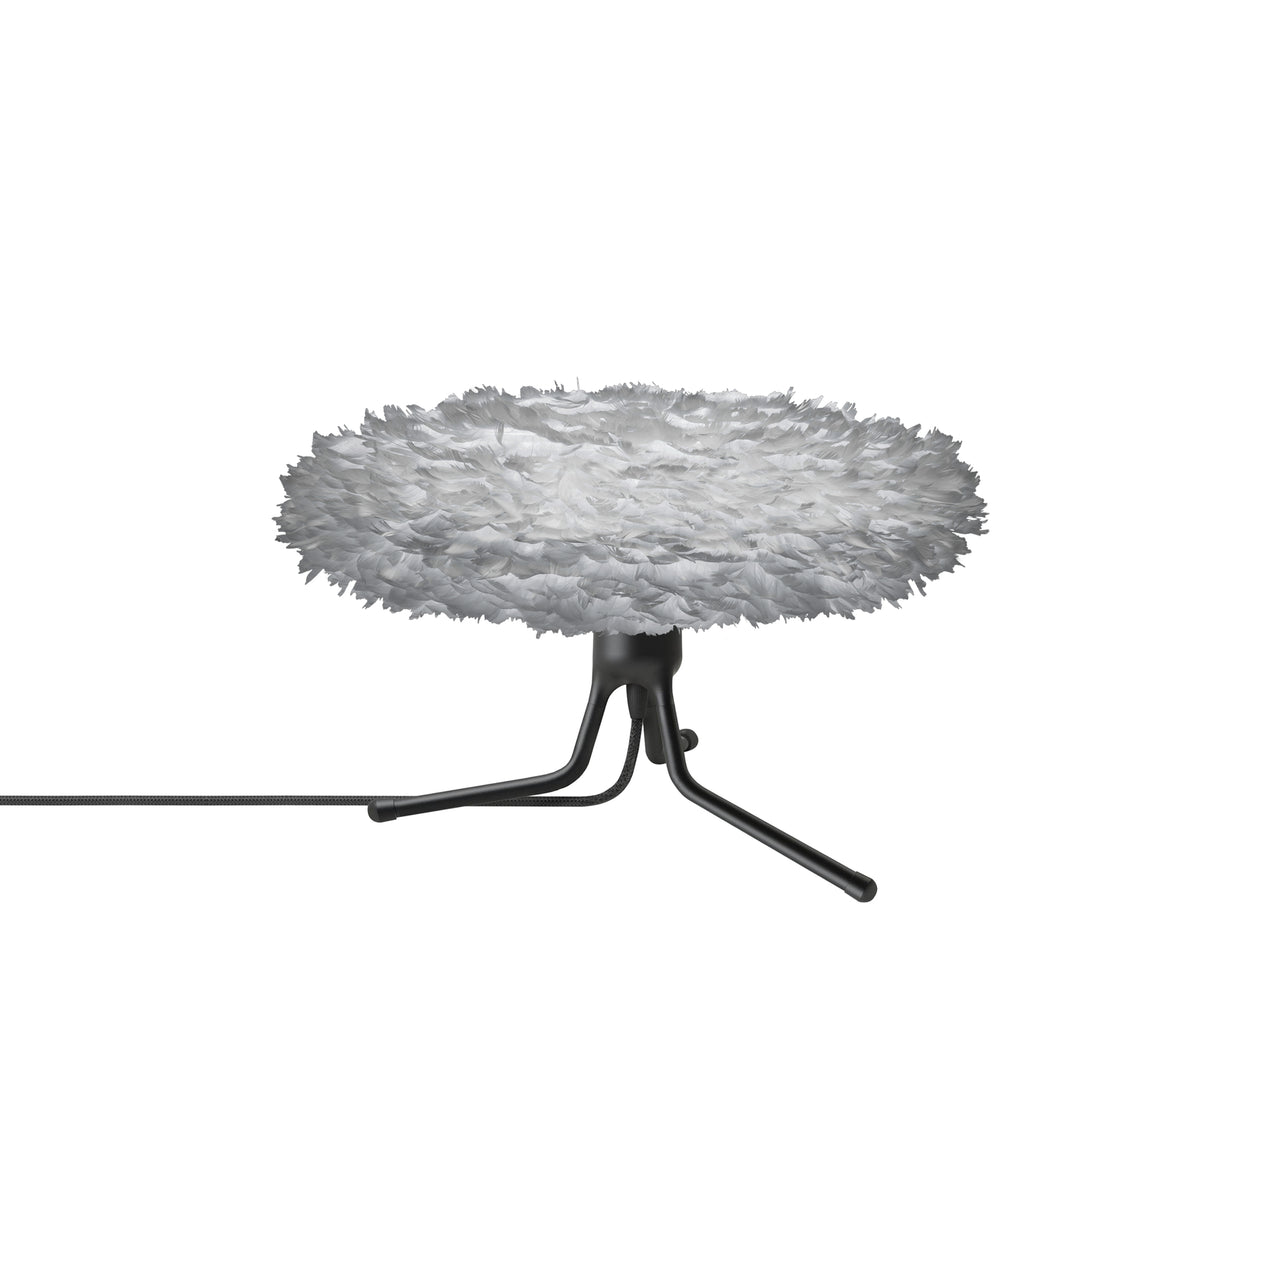 Eos Esther Adjustable Tripod Table Lamp: Medium - 24